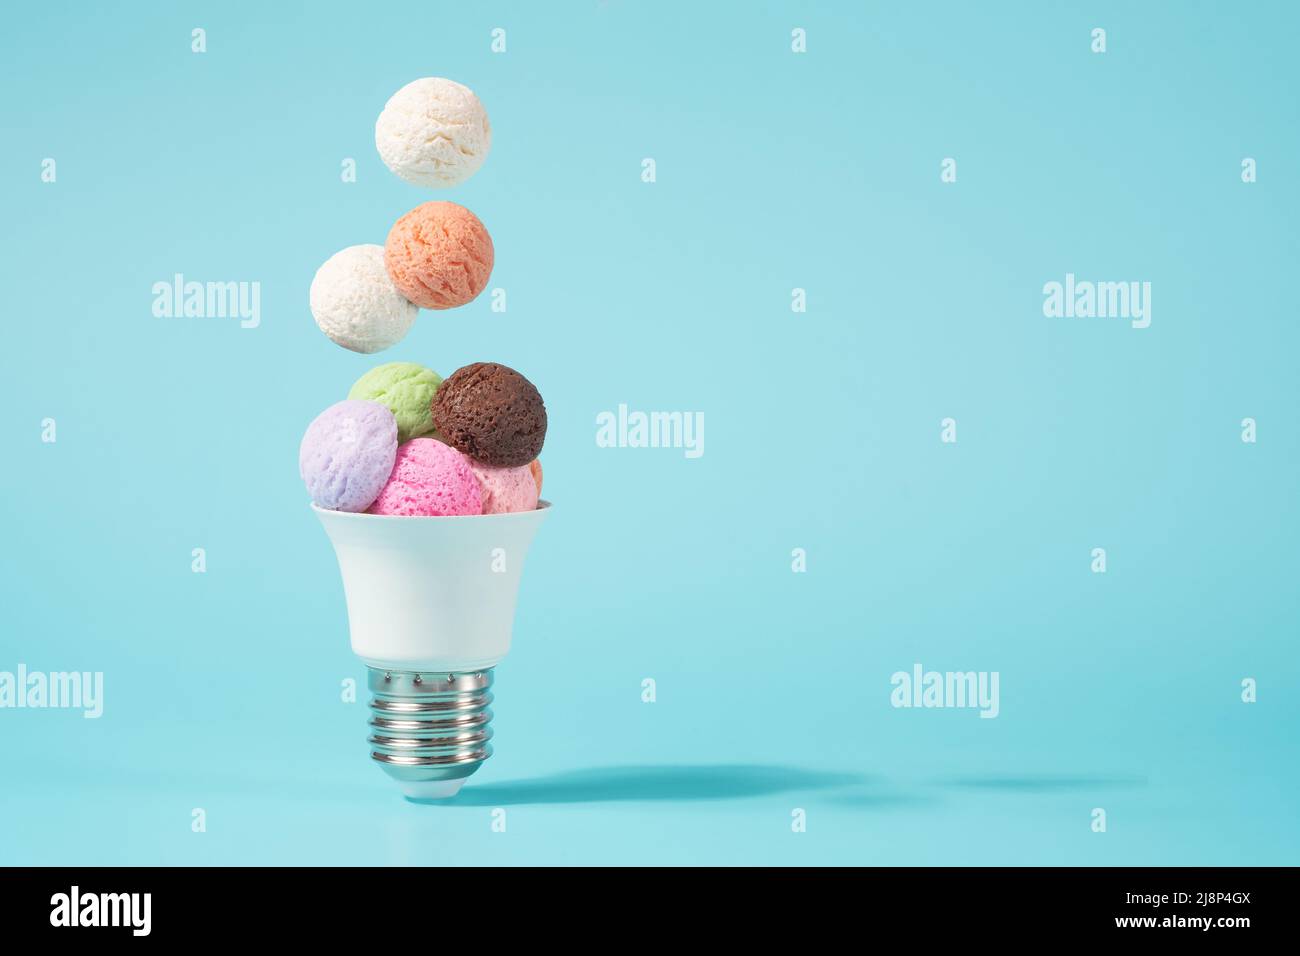 Ice cream balls falling into the light bulb cone. Electricity shortage minimal concept. Stock Photo